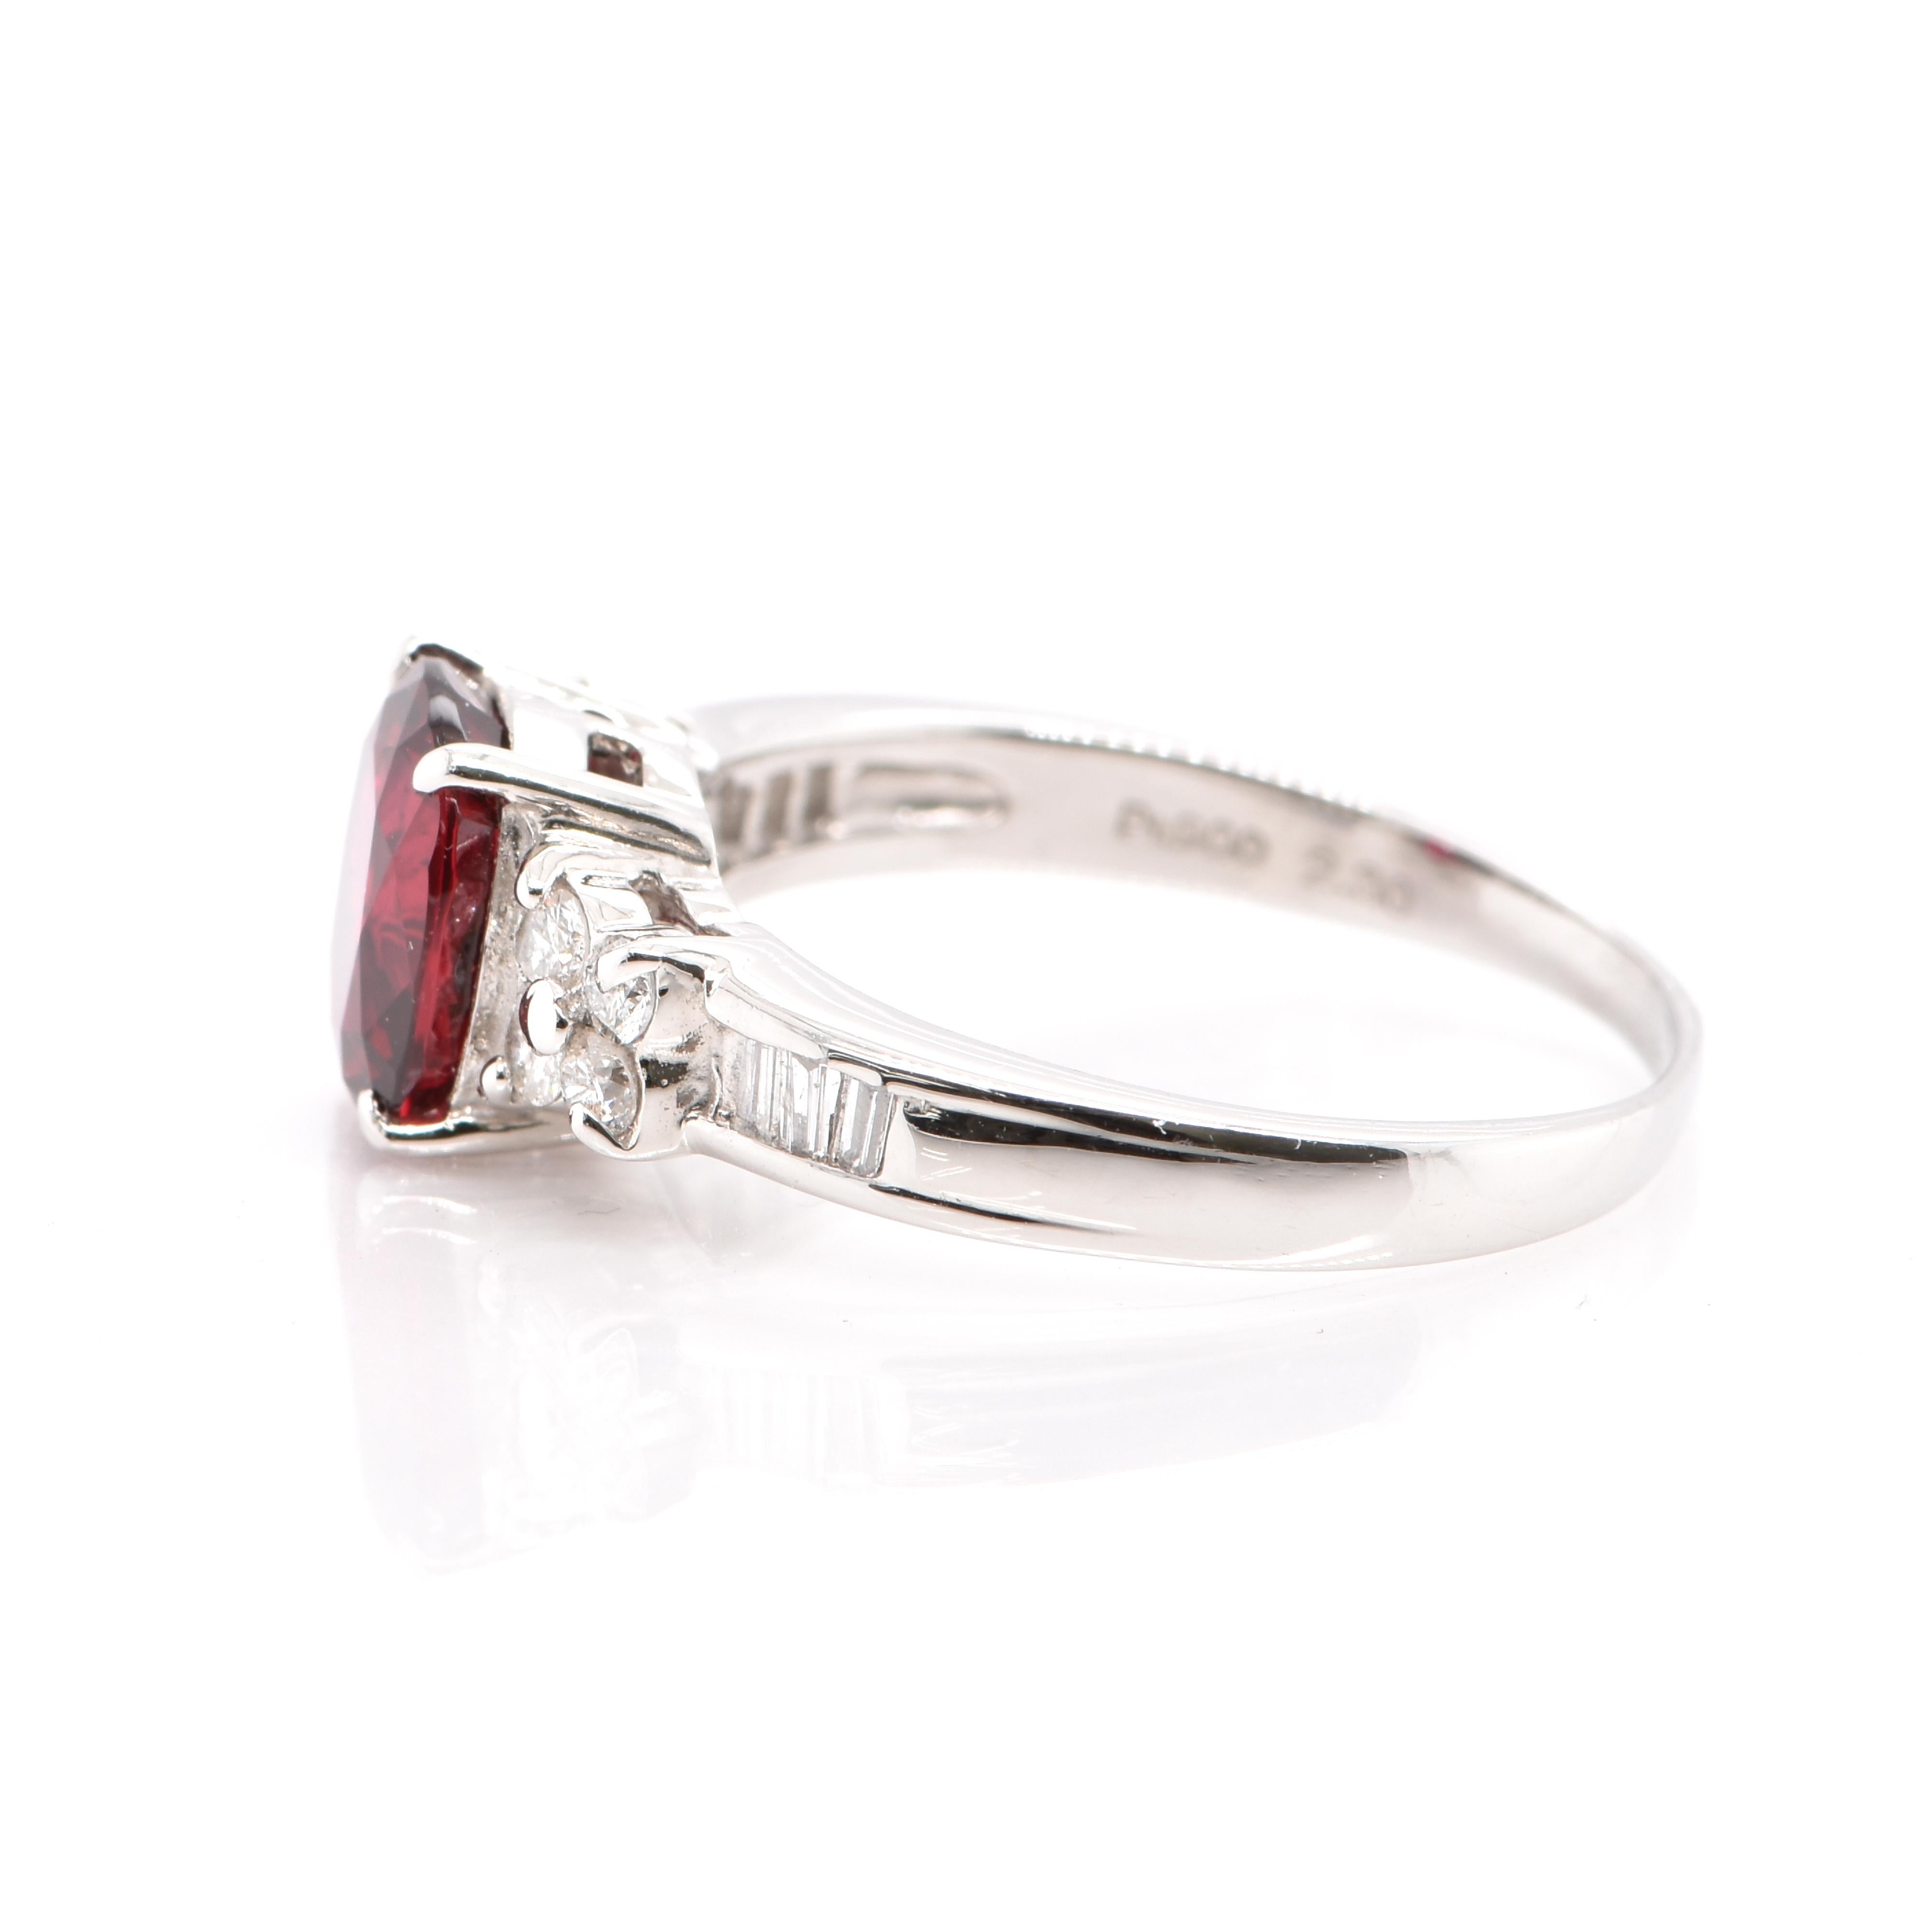 Cushion Cut 2.30 Carat, Natural, Vivid-Red Ruby and Diamond Ring Set Platinum